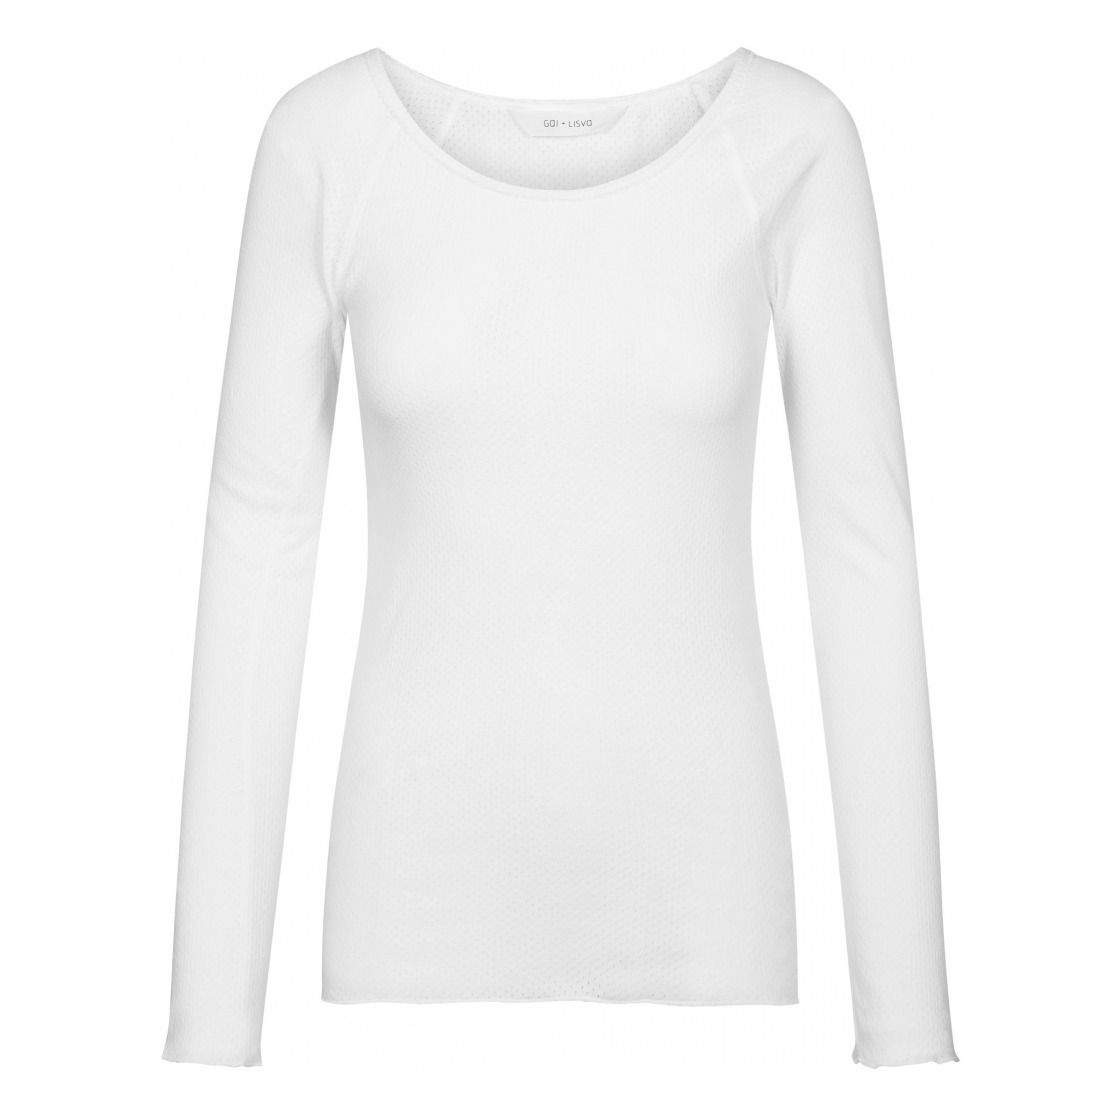 GAI+LISVA - T-Shirt Celia Coton Bio - Femme - Blanc